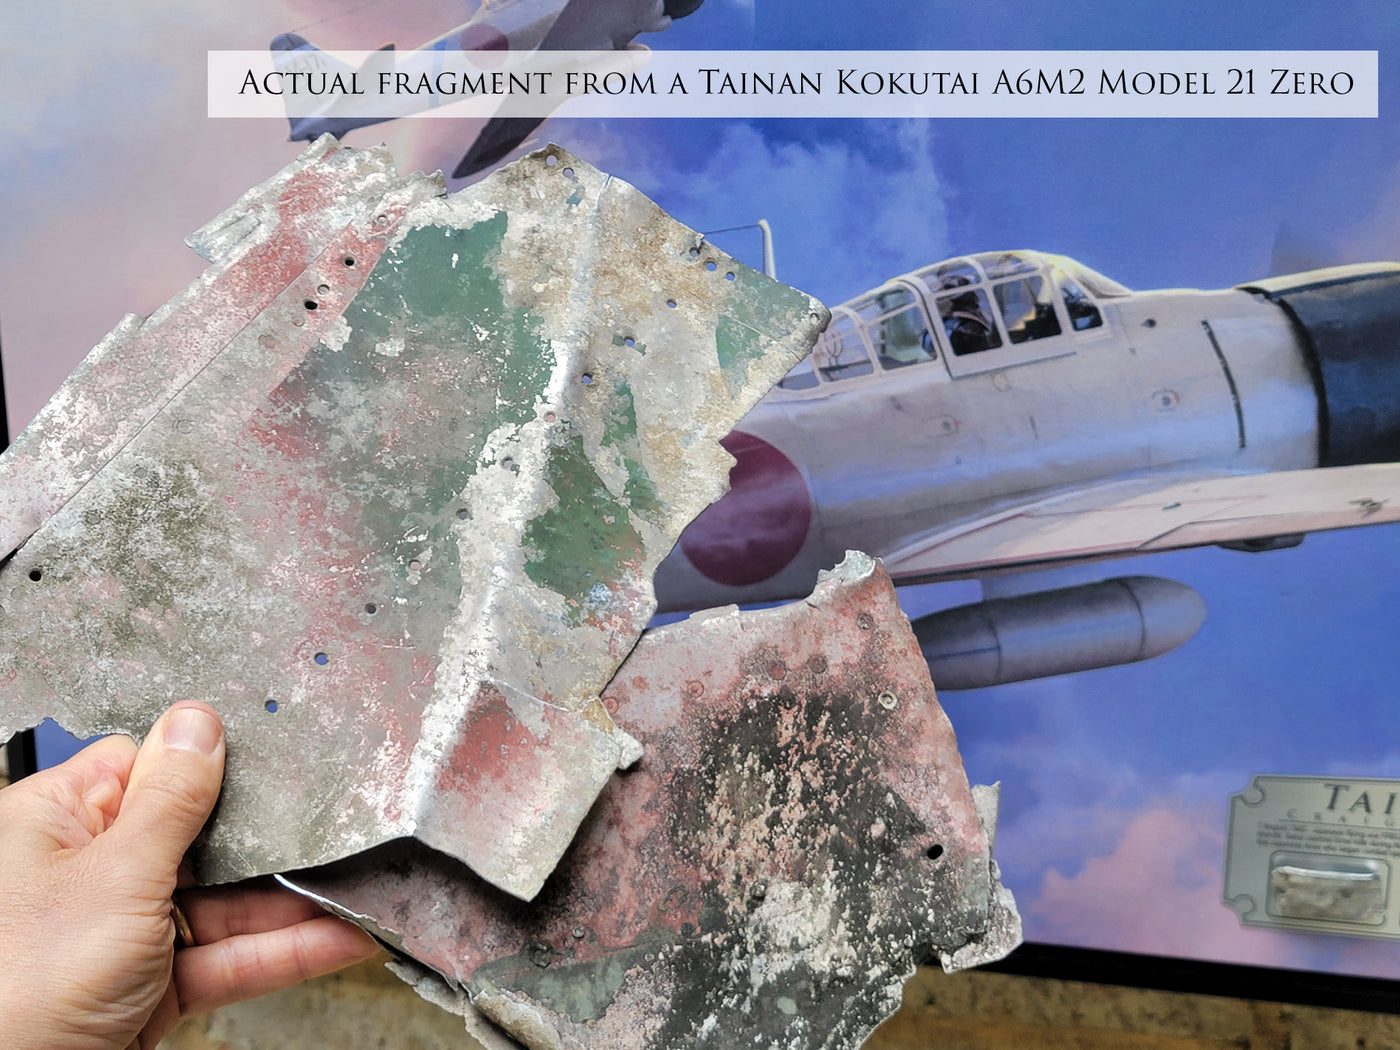 Tainan Kokutai - A6M2 Zero Aviation Art-Art Print-Aces In Action: The Workshop of Artist Craig Tinder